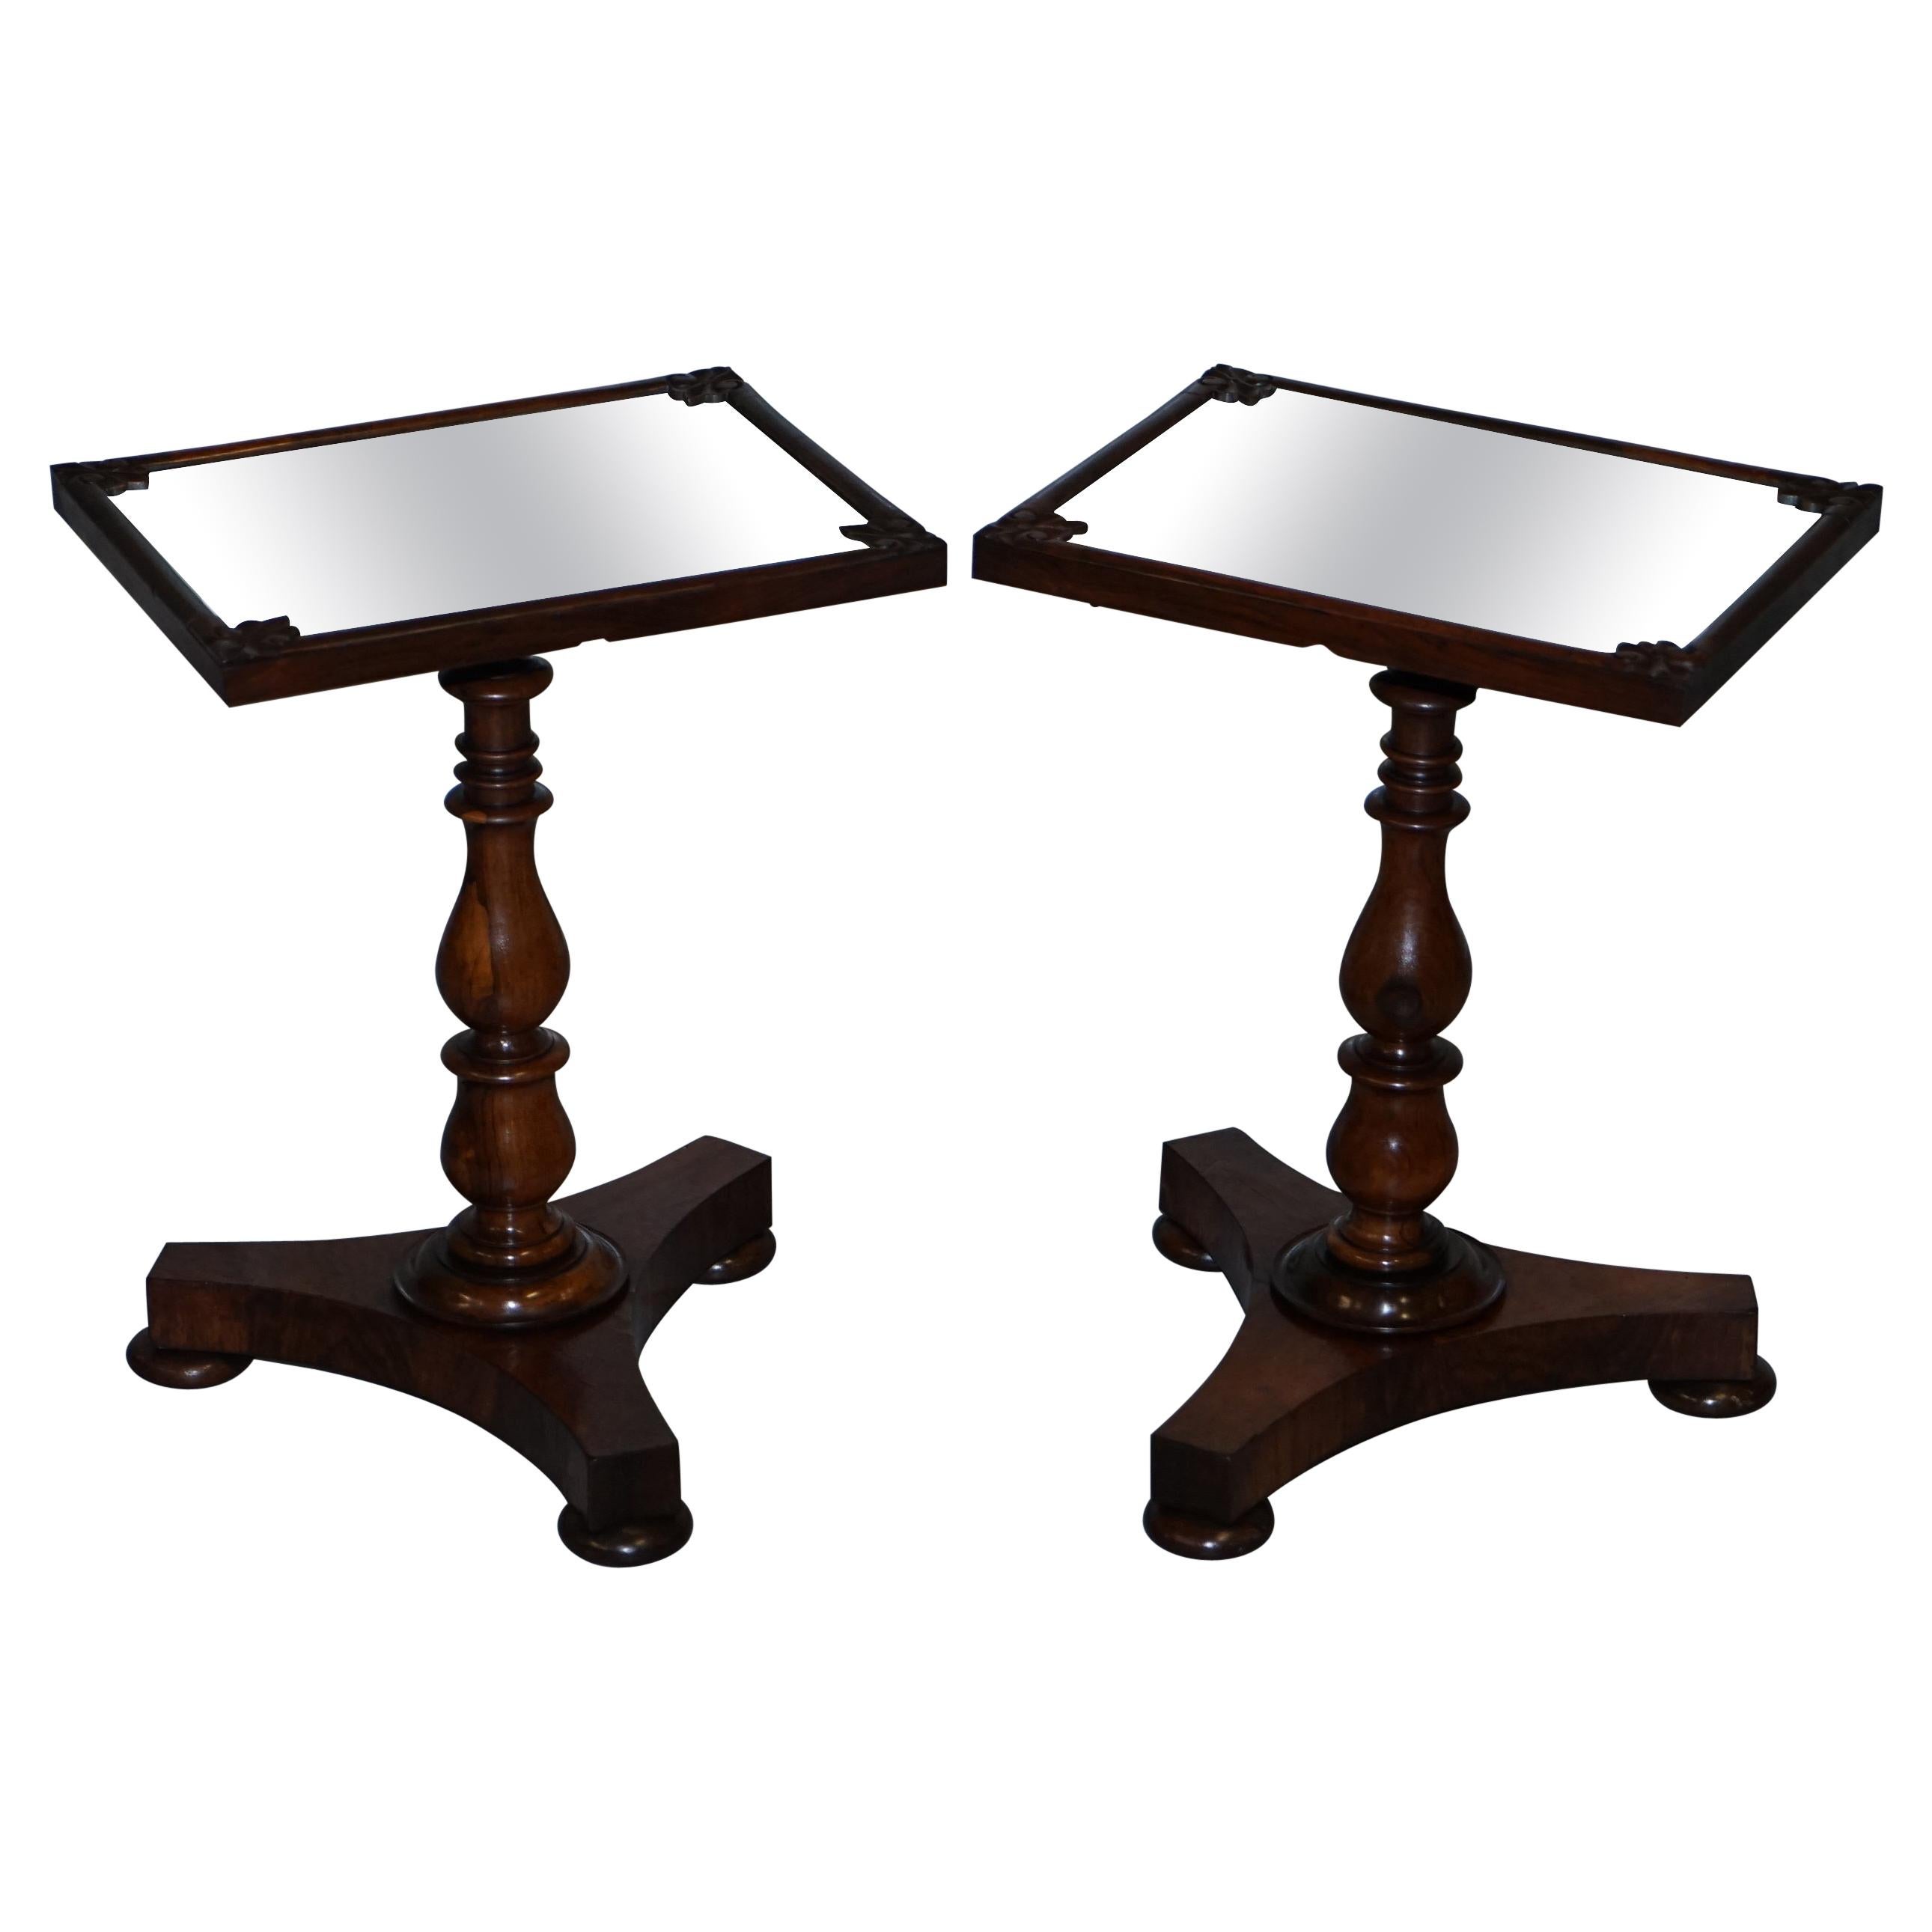 Pair of Stunning Original 1830 William IV Hardwood Mirrored Top Side Lamp Tables